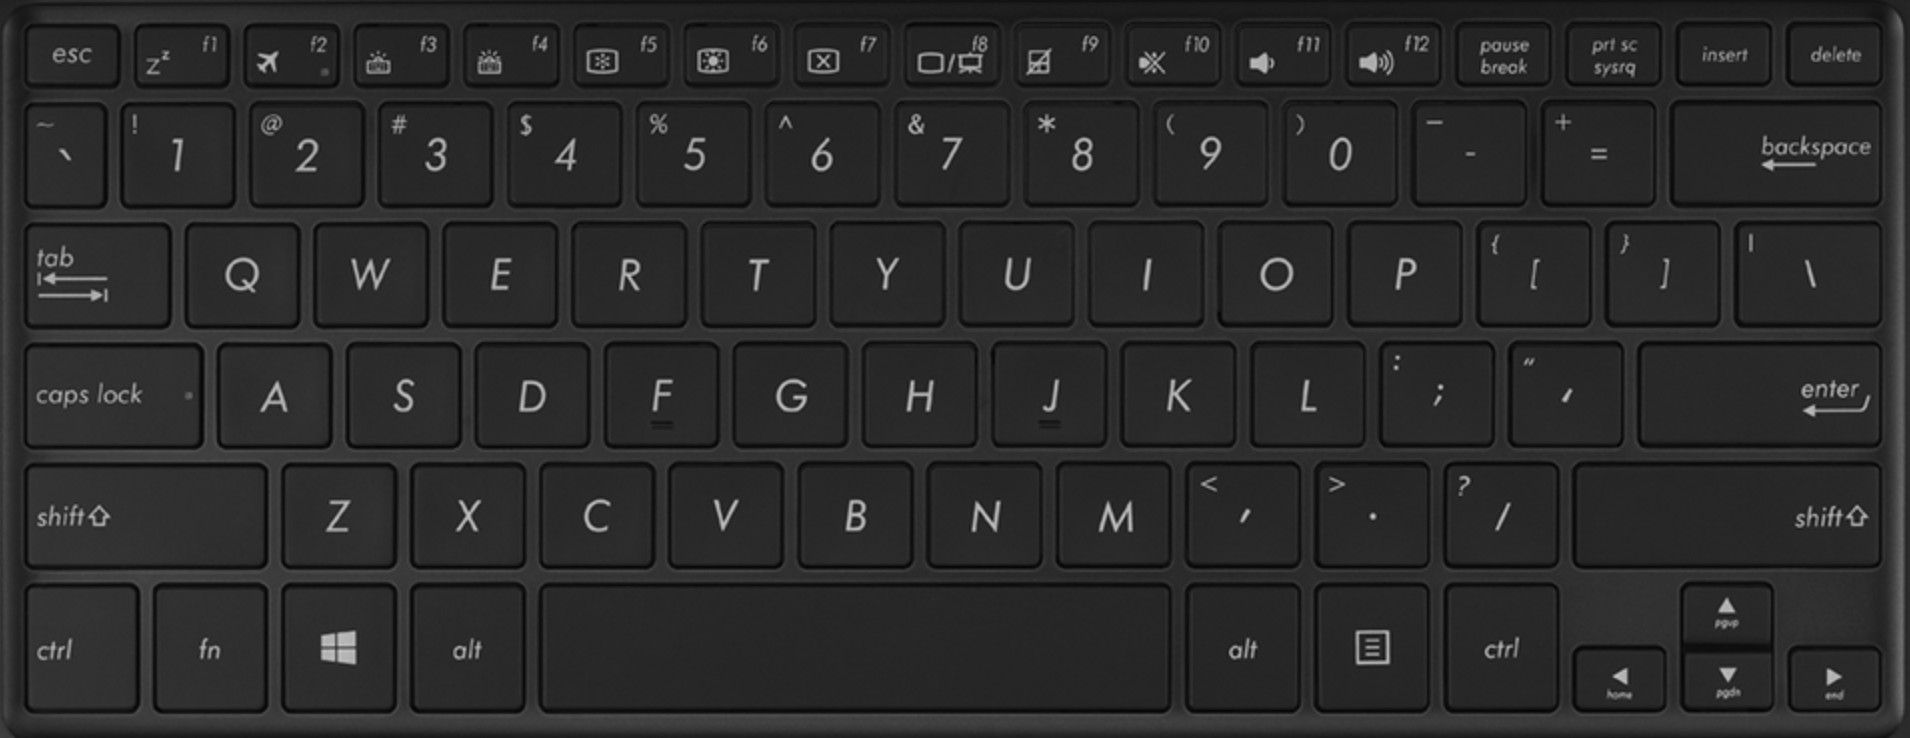 asus-UX360UA-keyboard-key-replacement.jpg